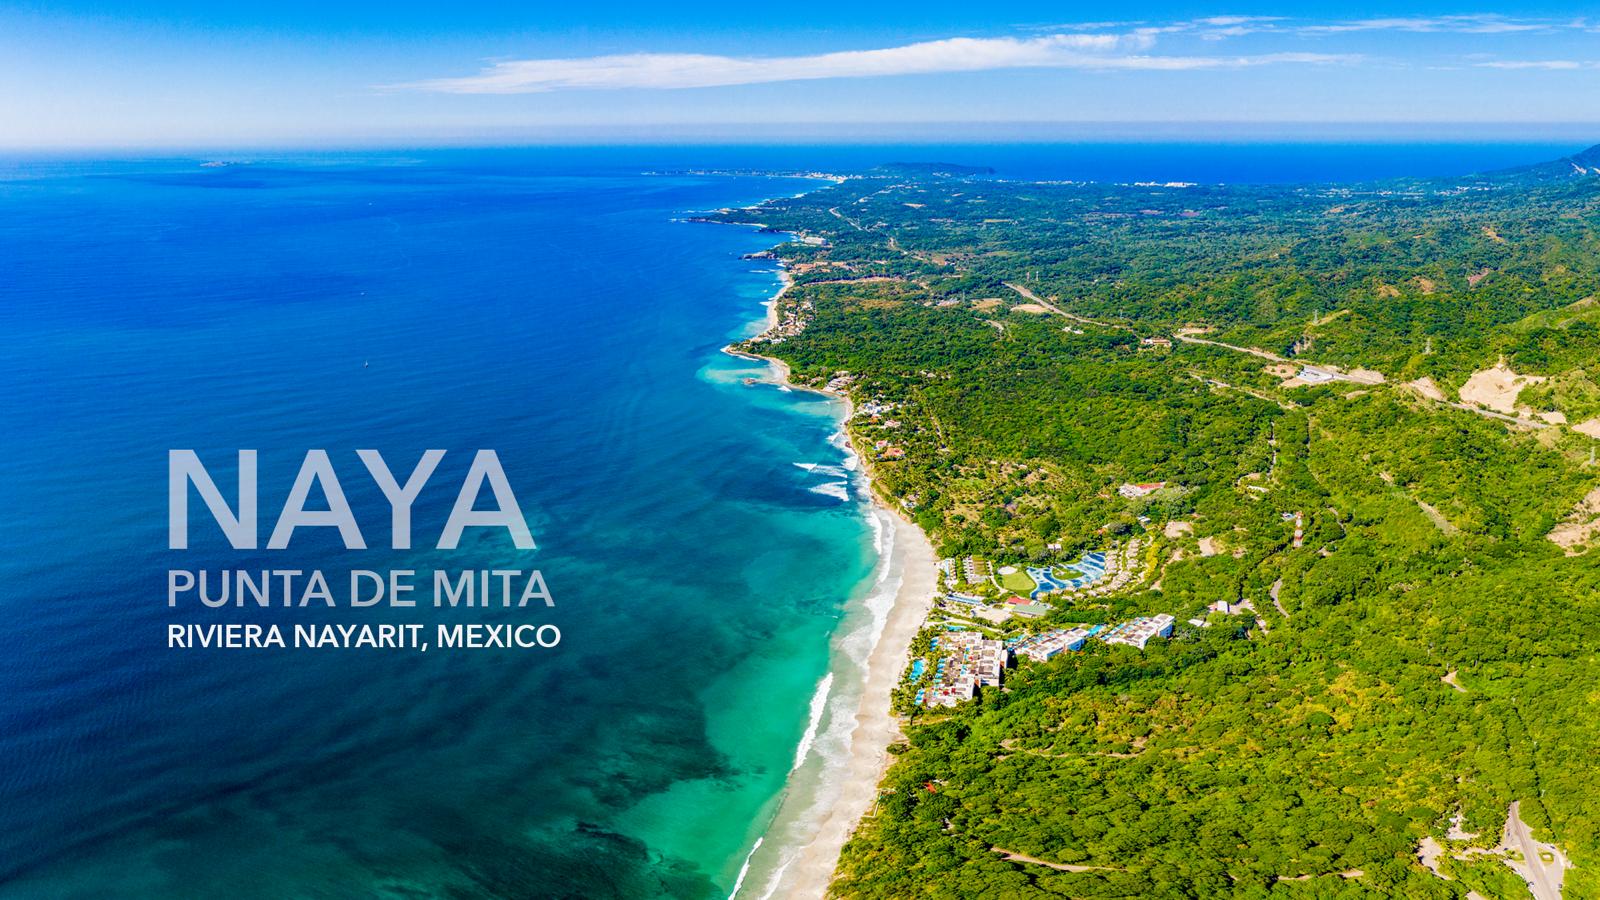 NAYA - Punta de Mita beachfront condos for sale - Riviera Nayarit, Mexico